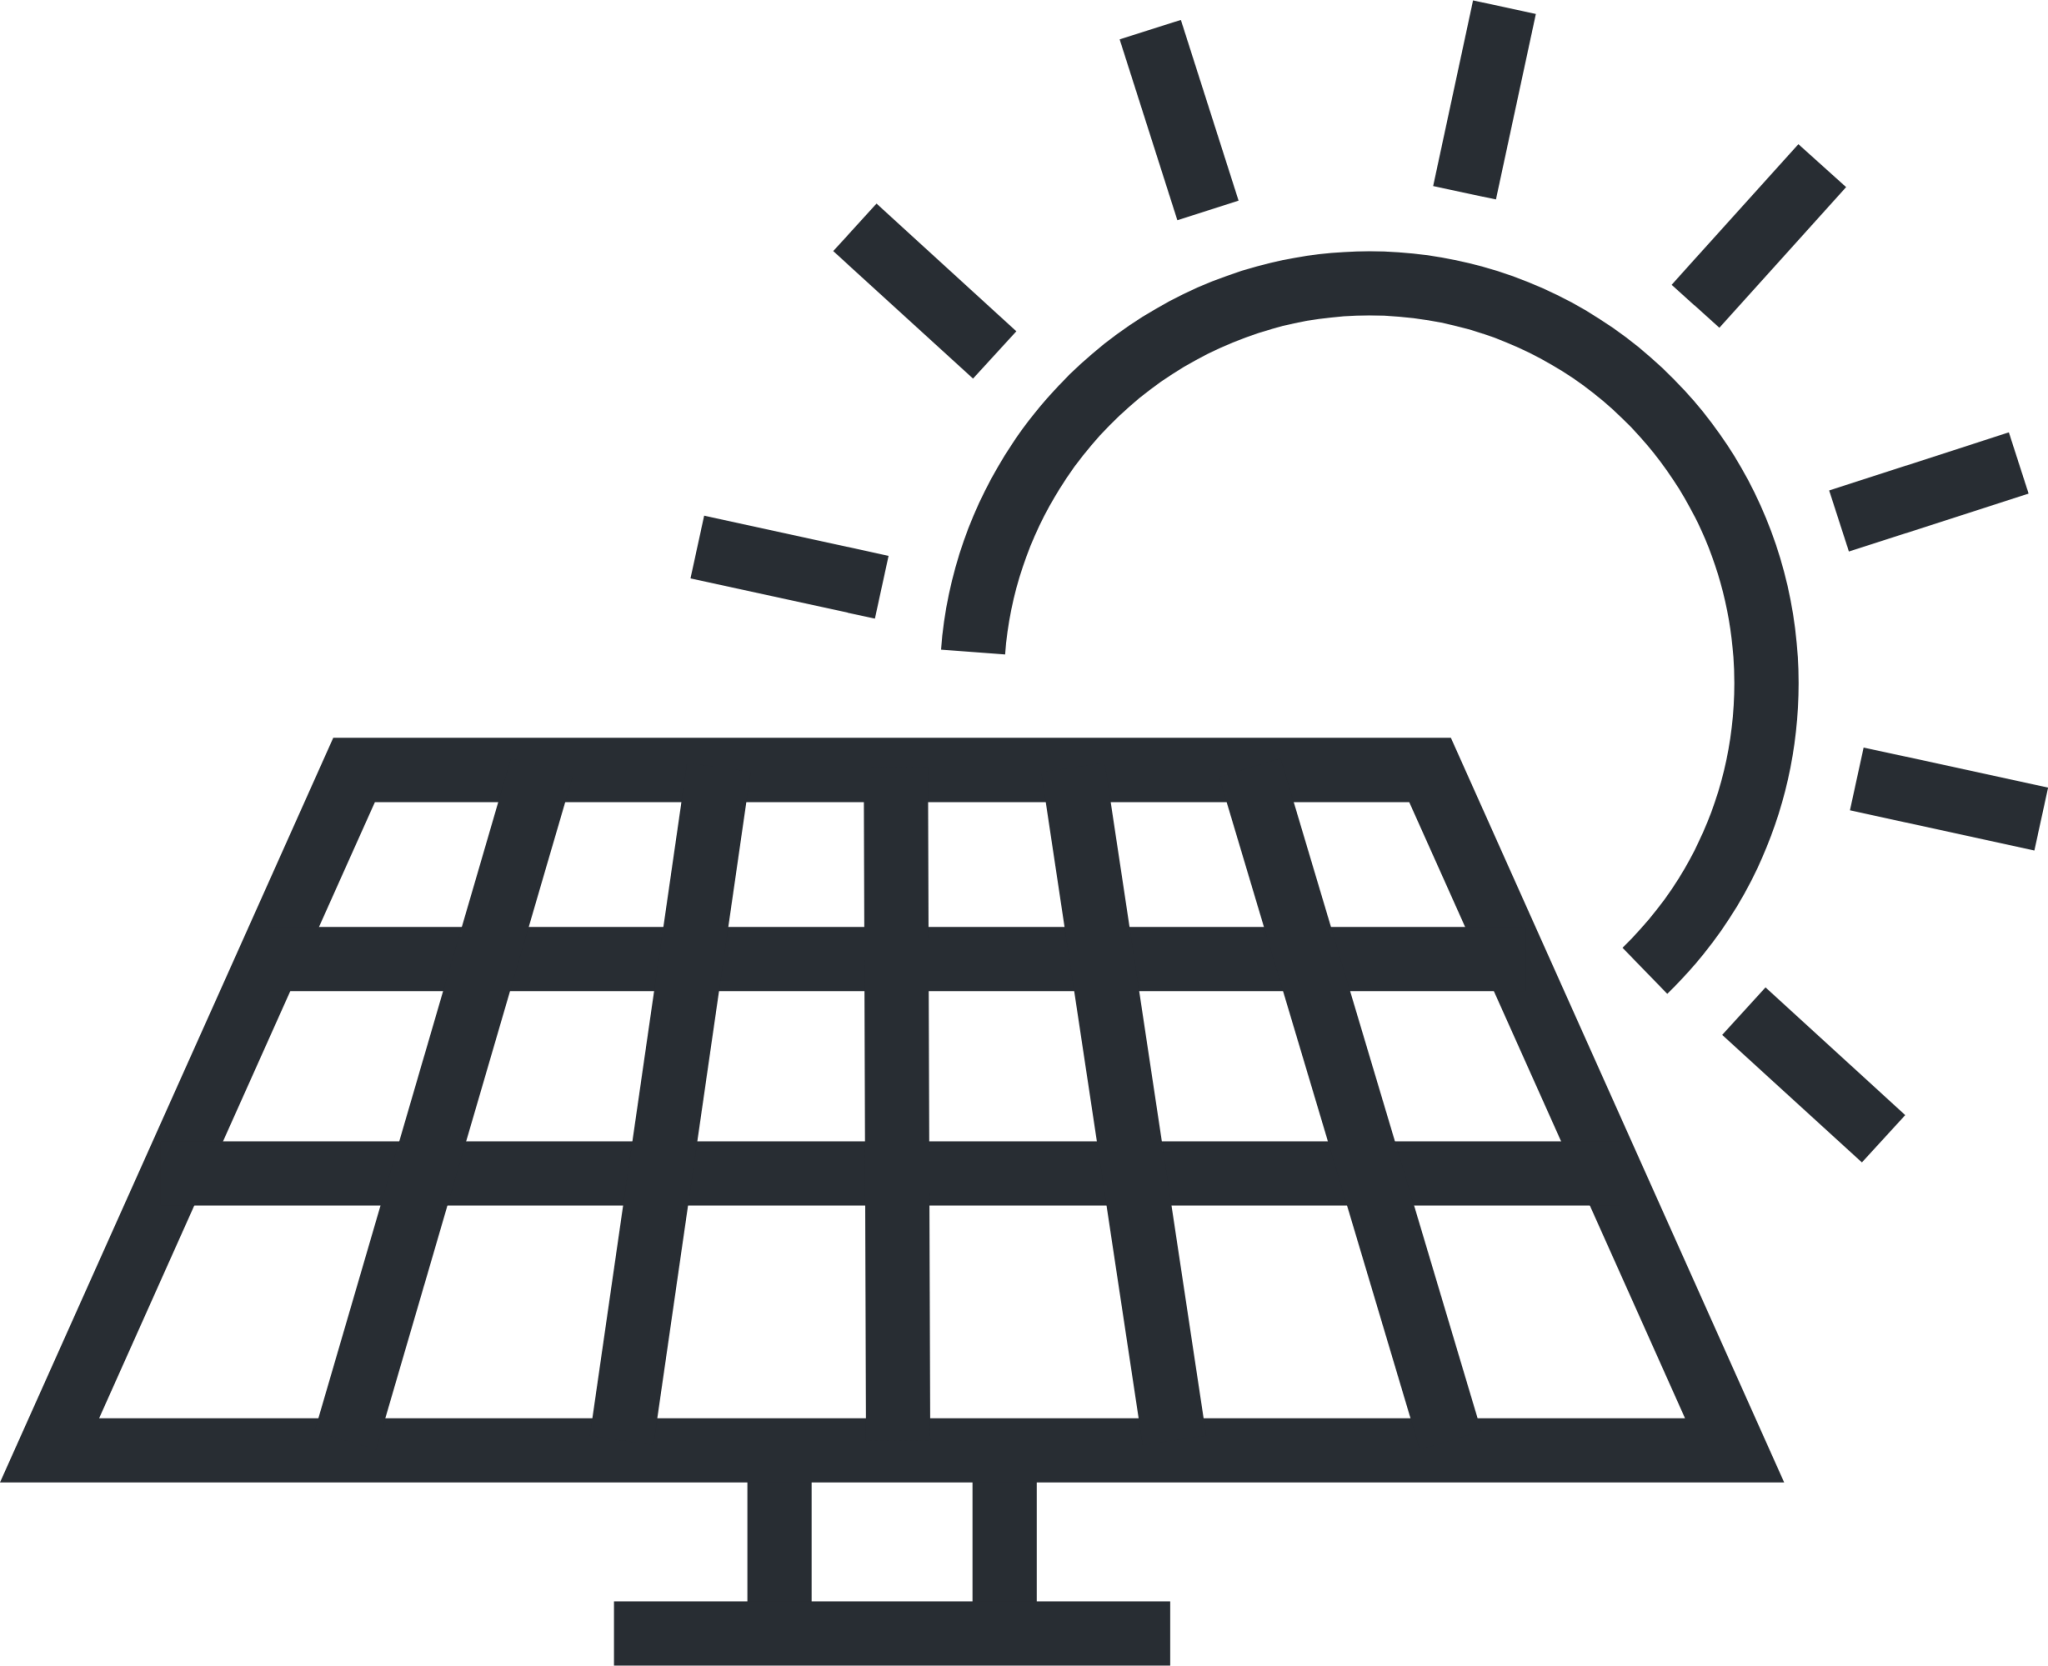 solar panel symbol